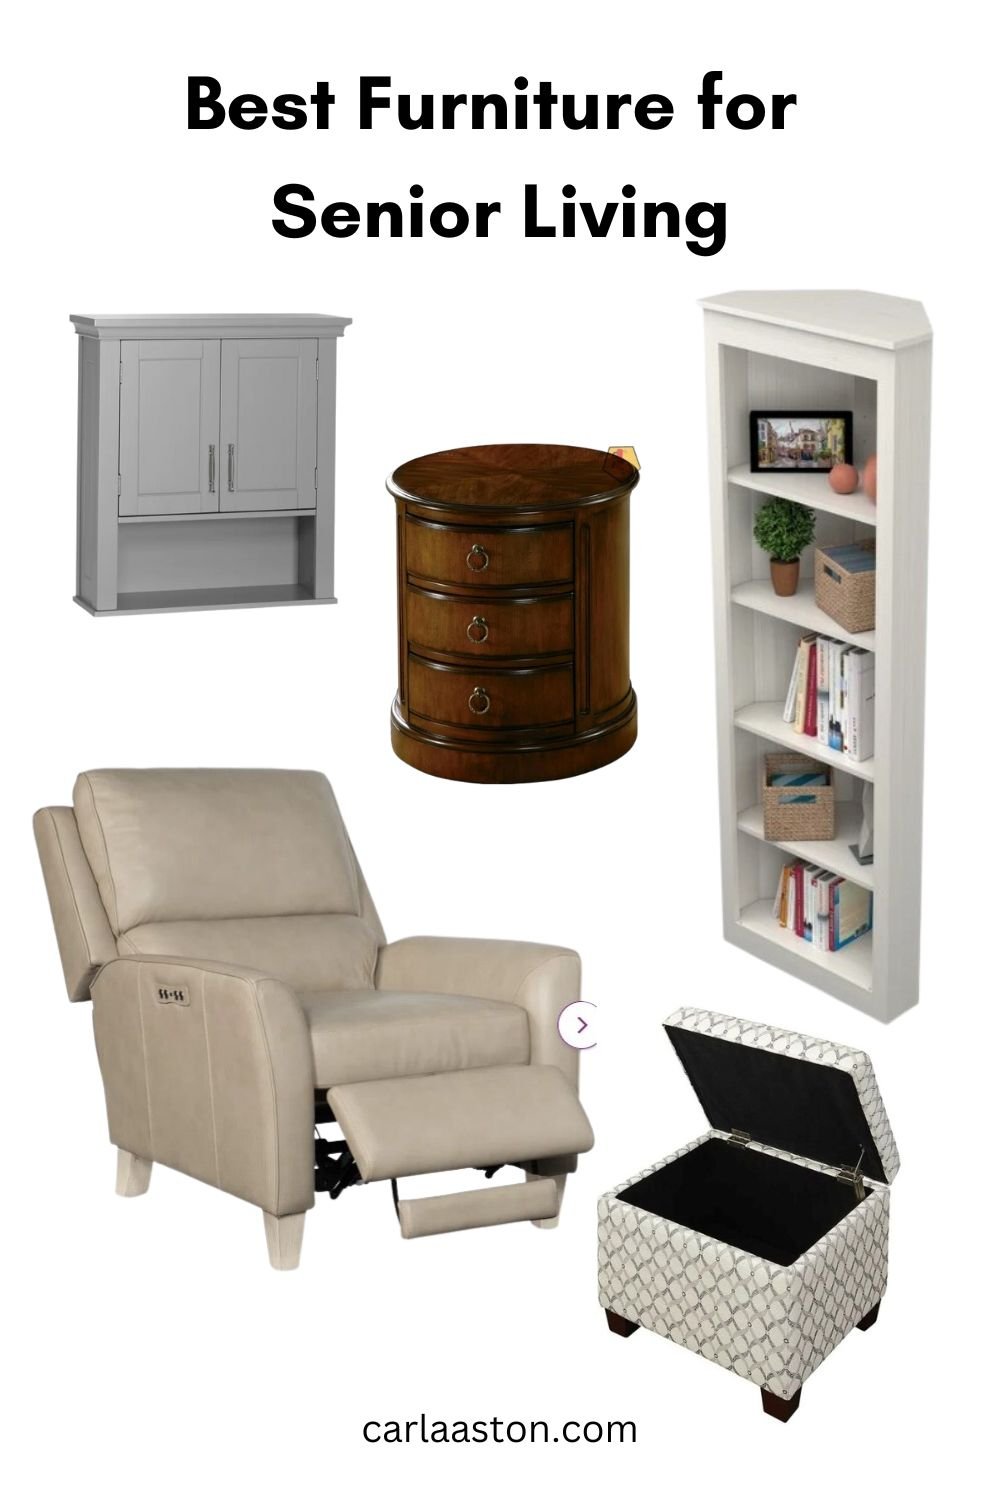 Senior Living Furniture on a Budget ...